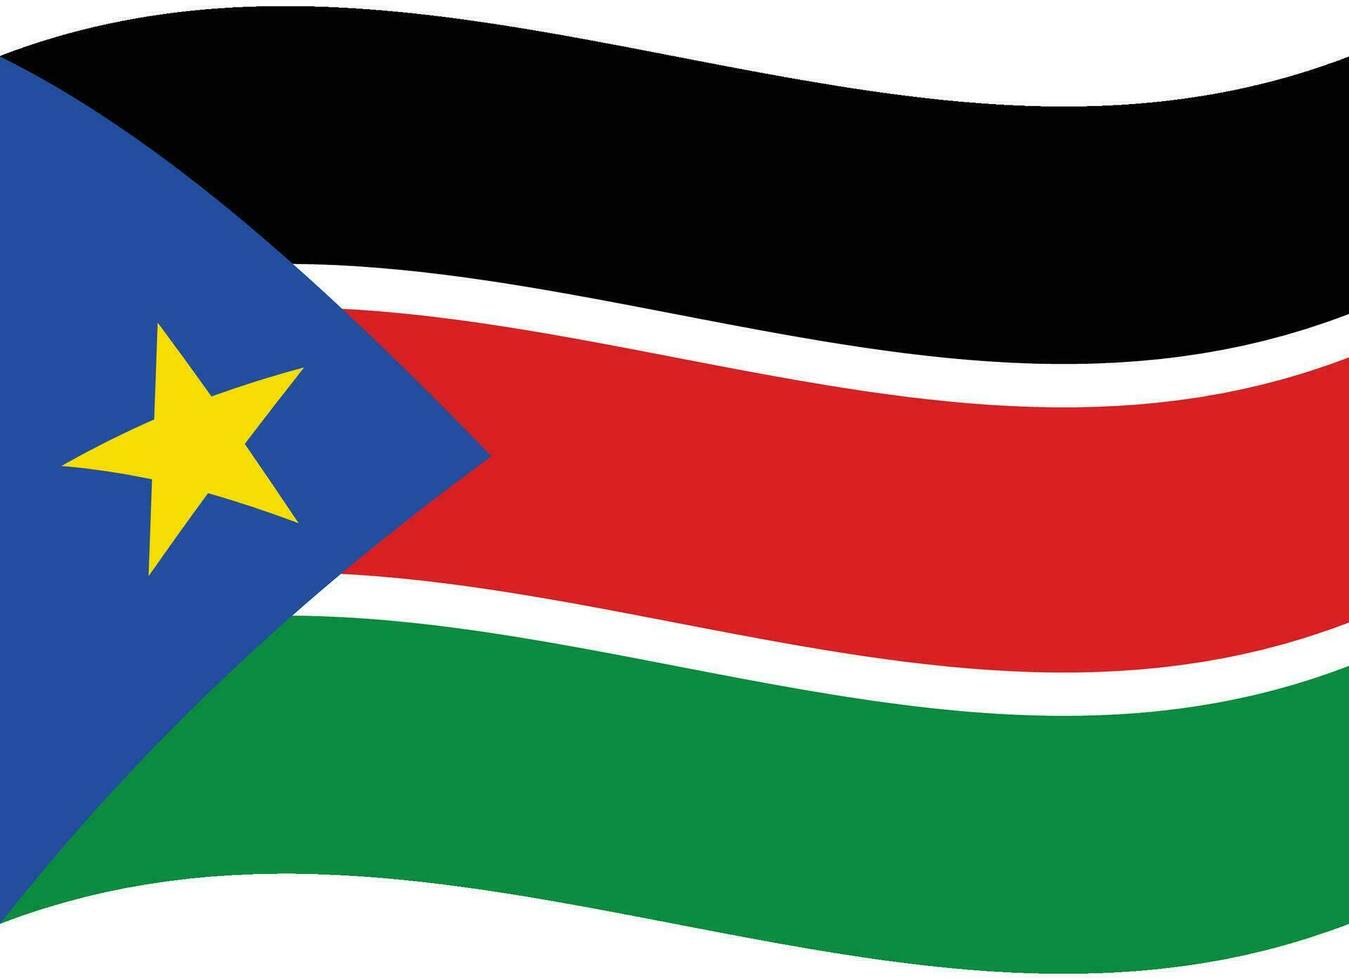 Süd Sudan Flagge Welle. Süd Sudan Flagge. Flagge von Süd Sudan vektor